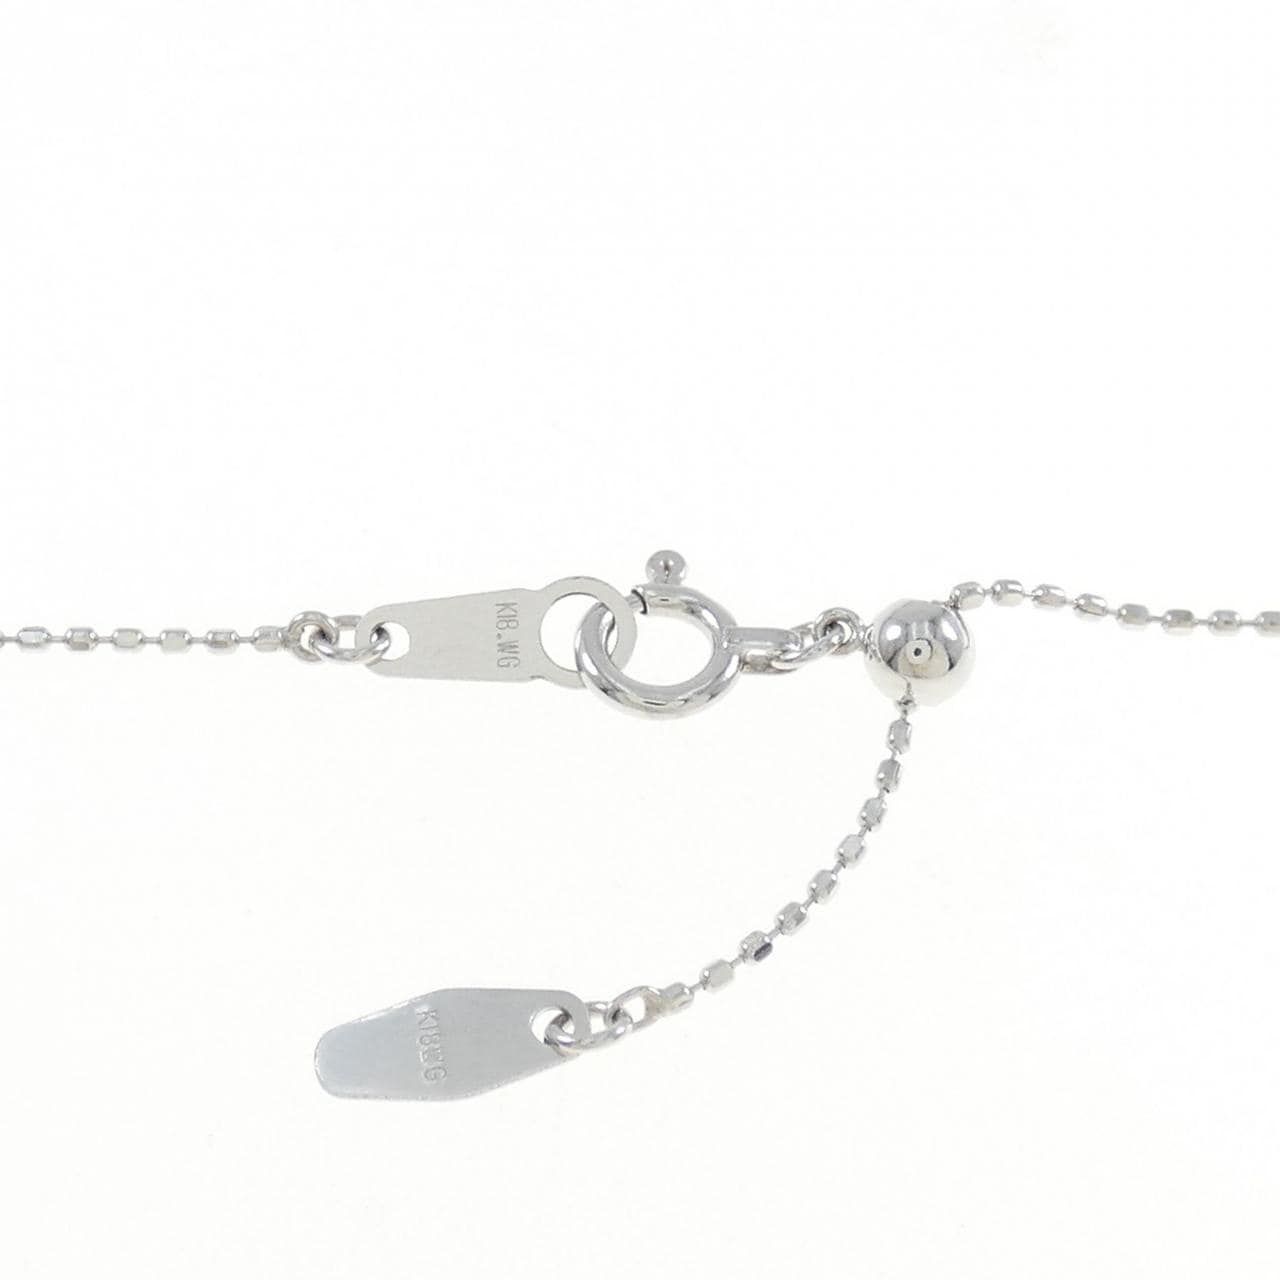 K18WG Tanzanite necklace 3.09CT